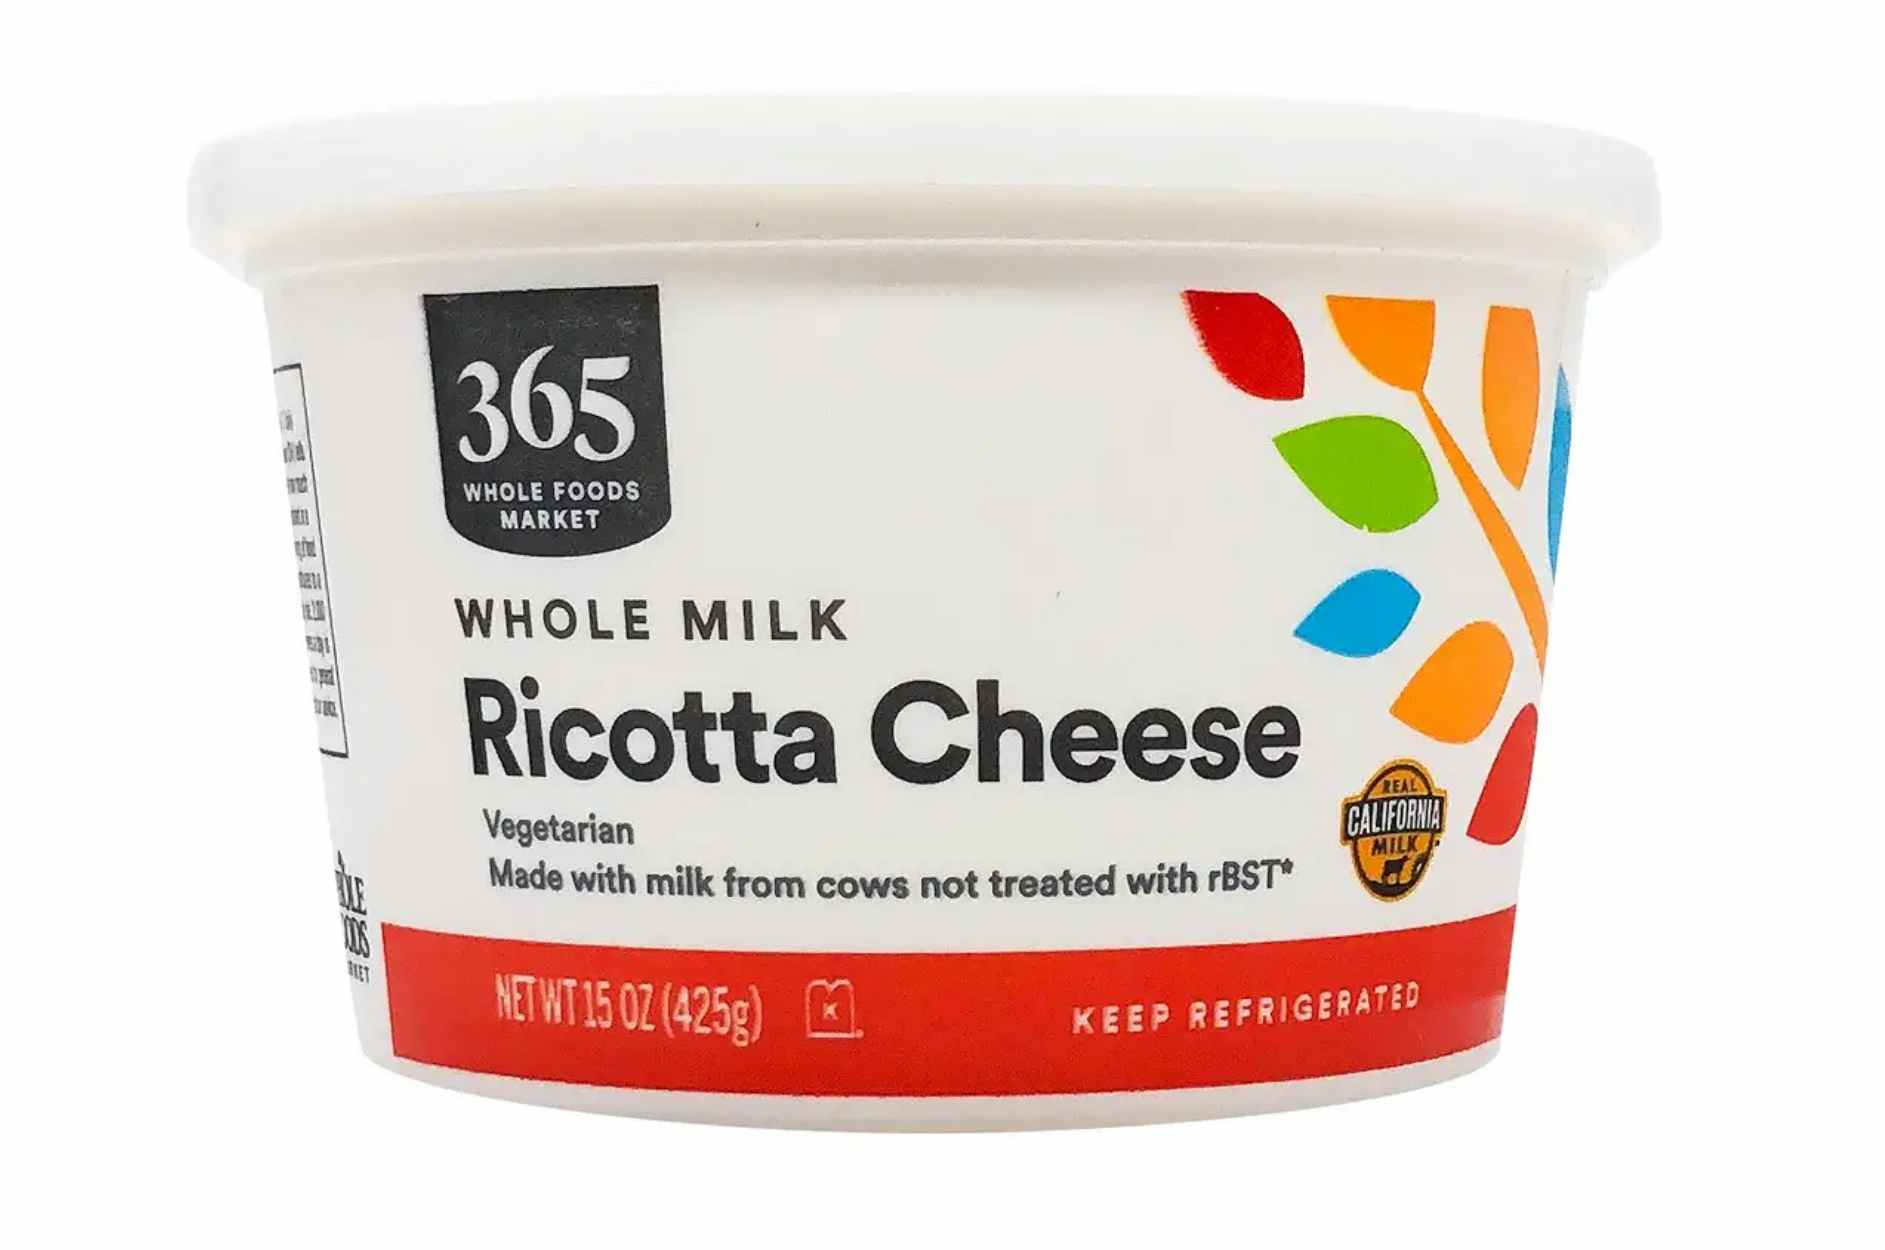 recalls 365 whole foods market whole milk ricotta cheese 1